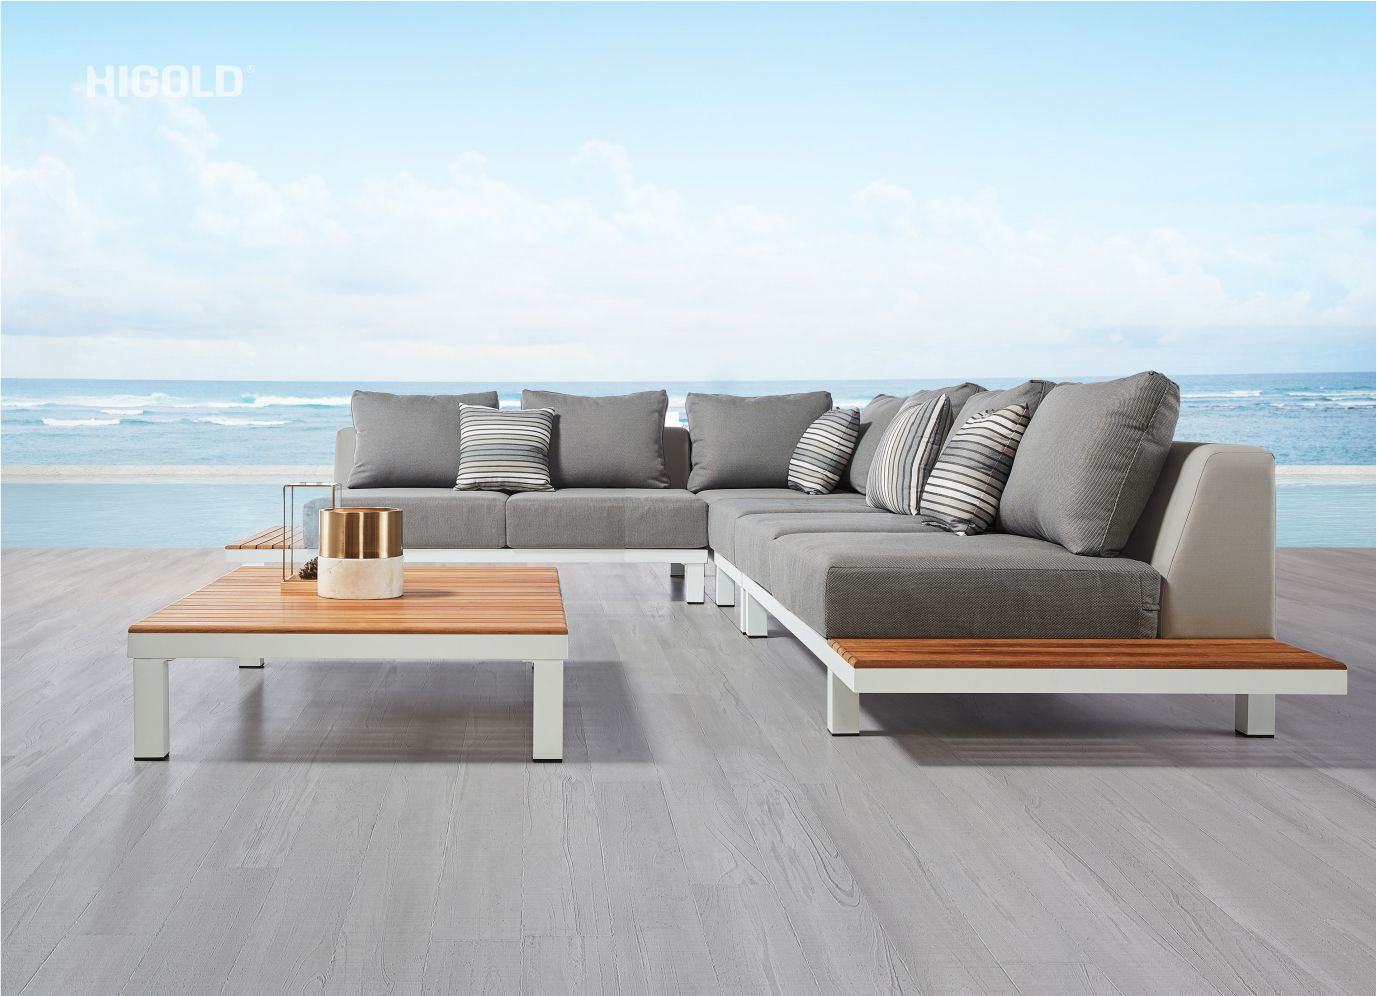 Polo gray outdoor sectional sofa for 5